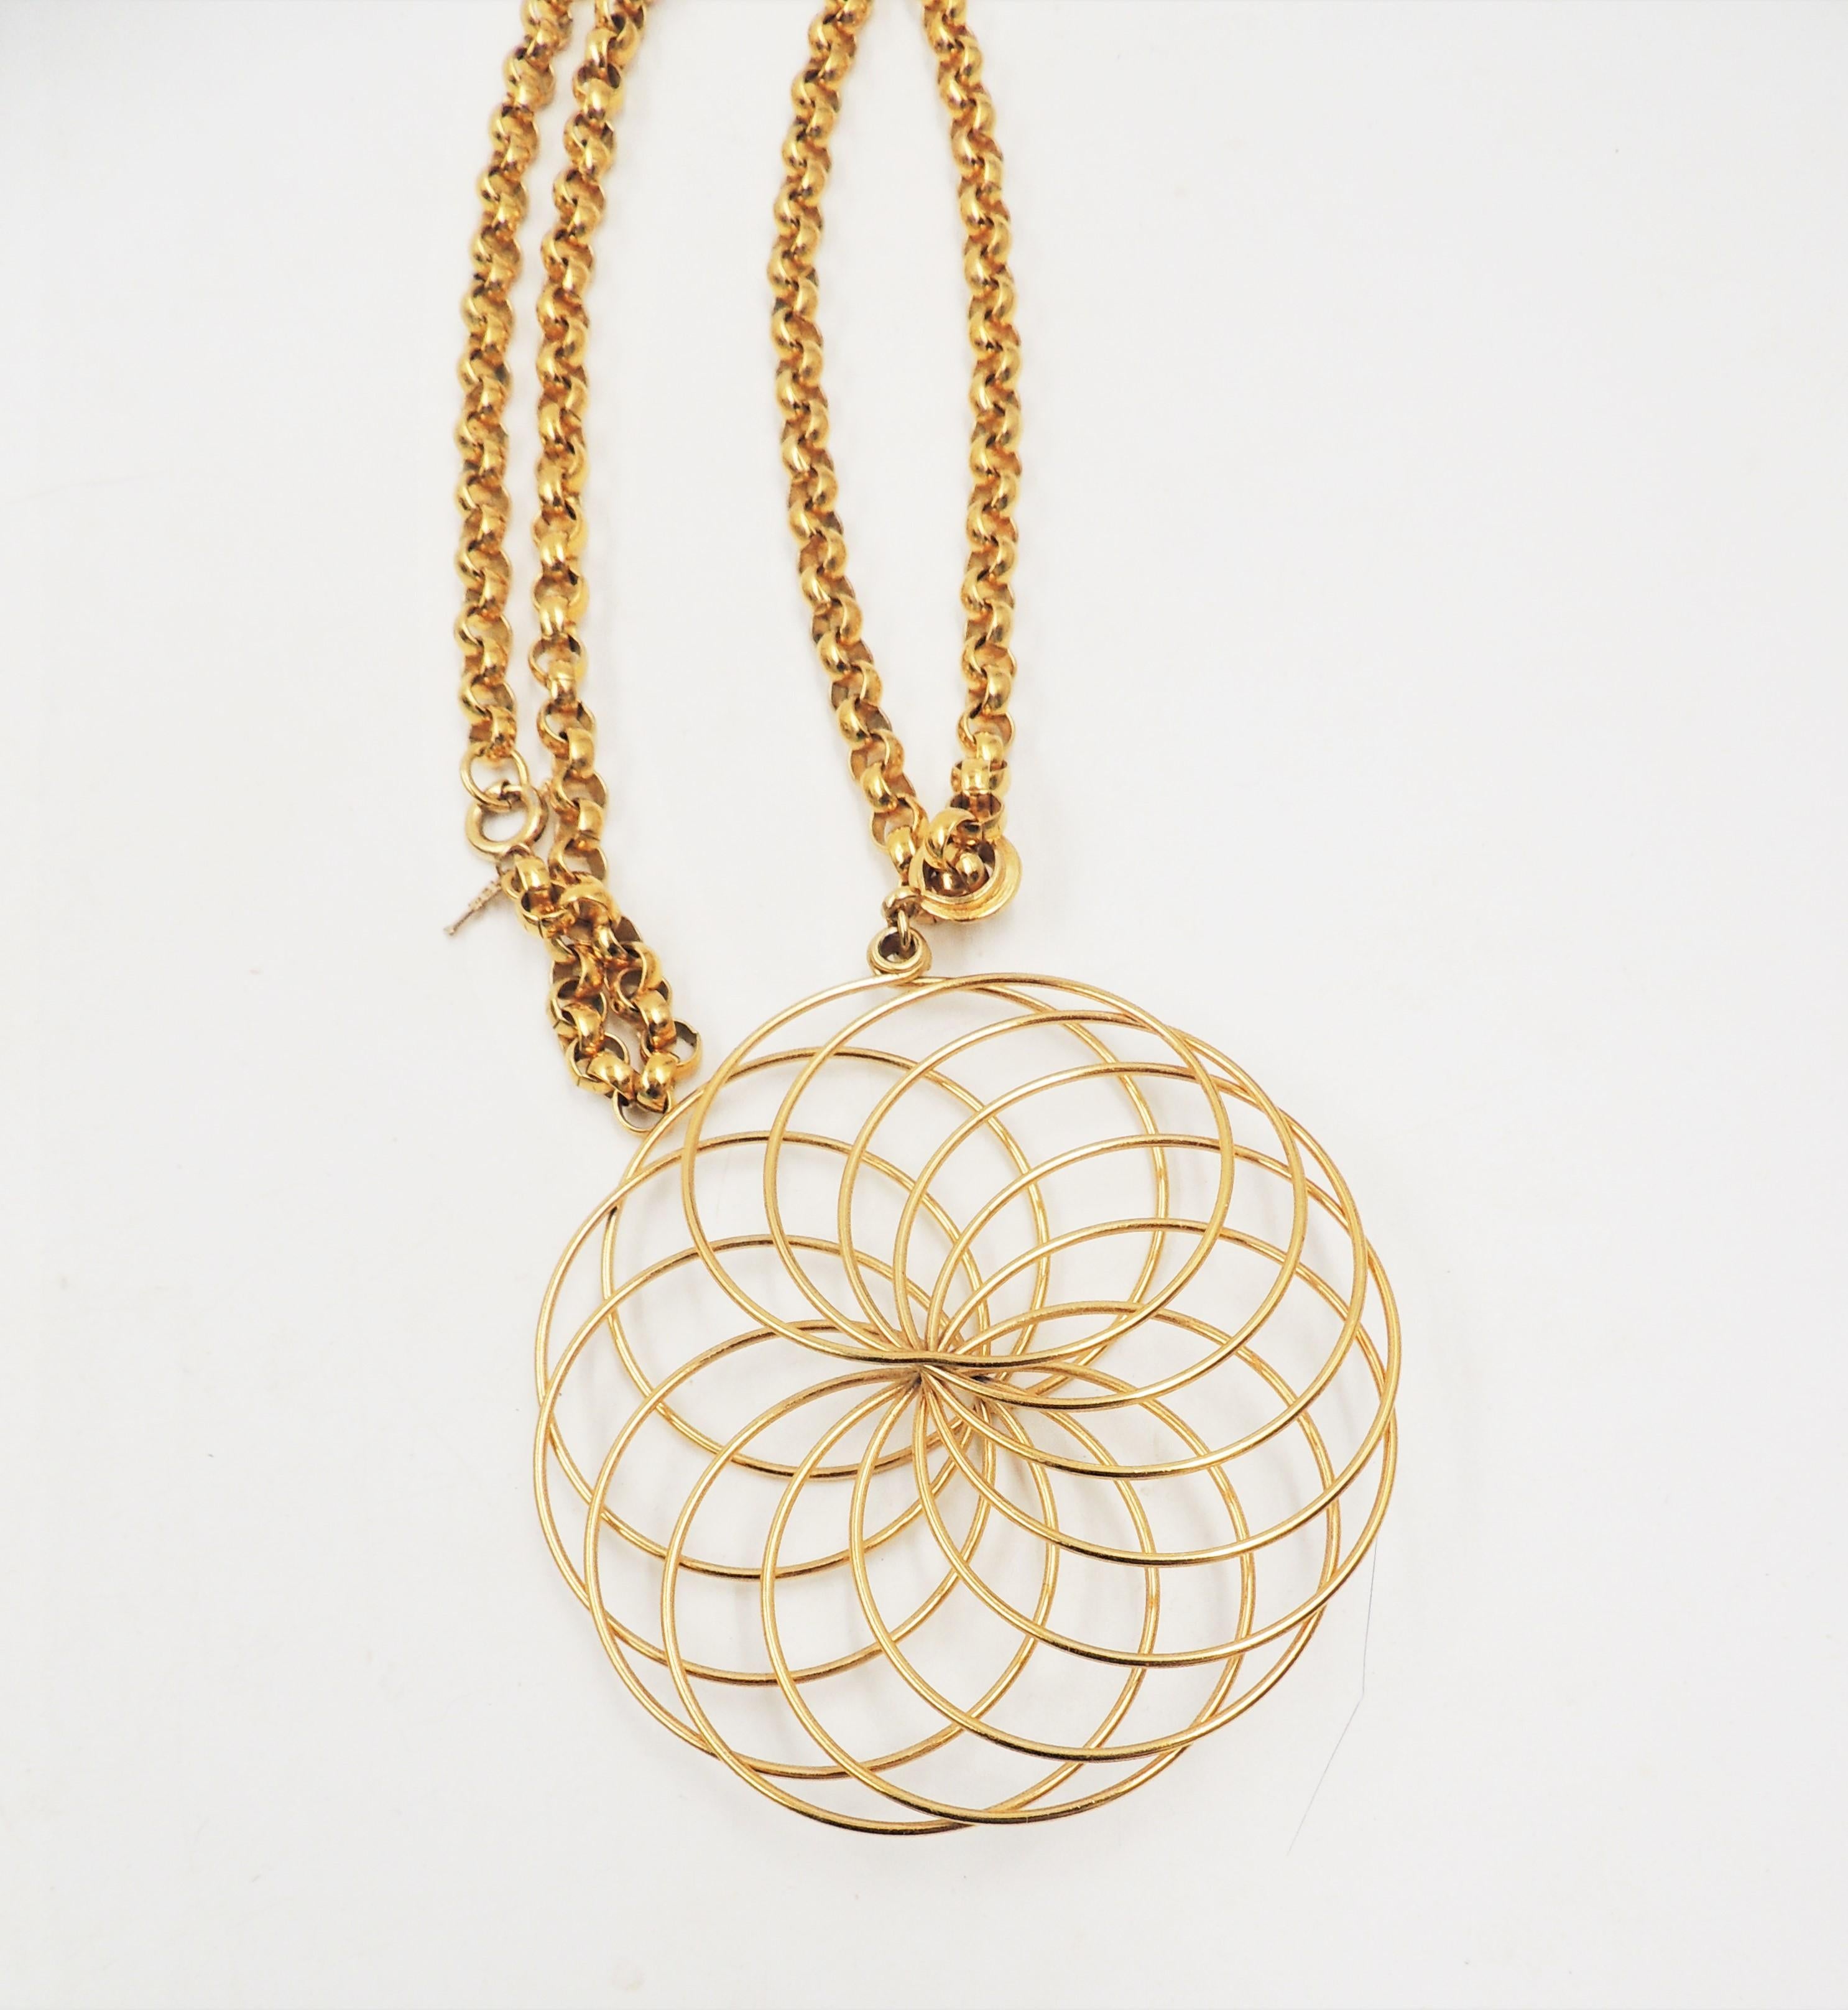 Vintage Signed Crown Trifari Goldtone Spiral Pendant Necklace, 1974 Ad Piece For Sale 5